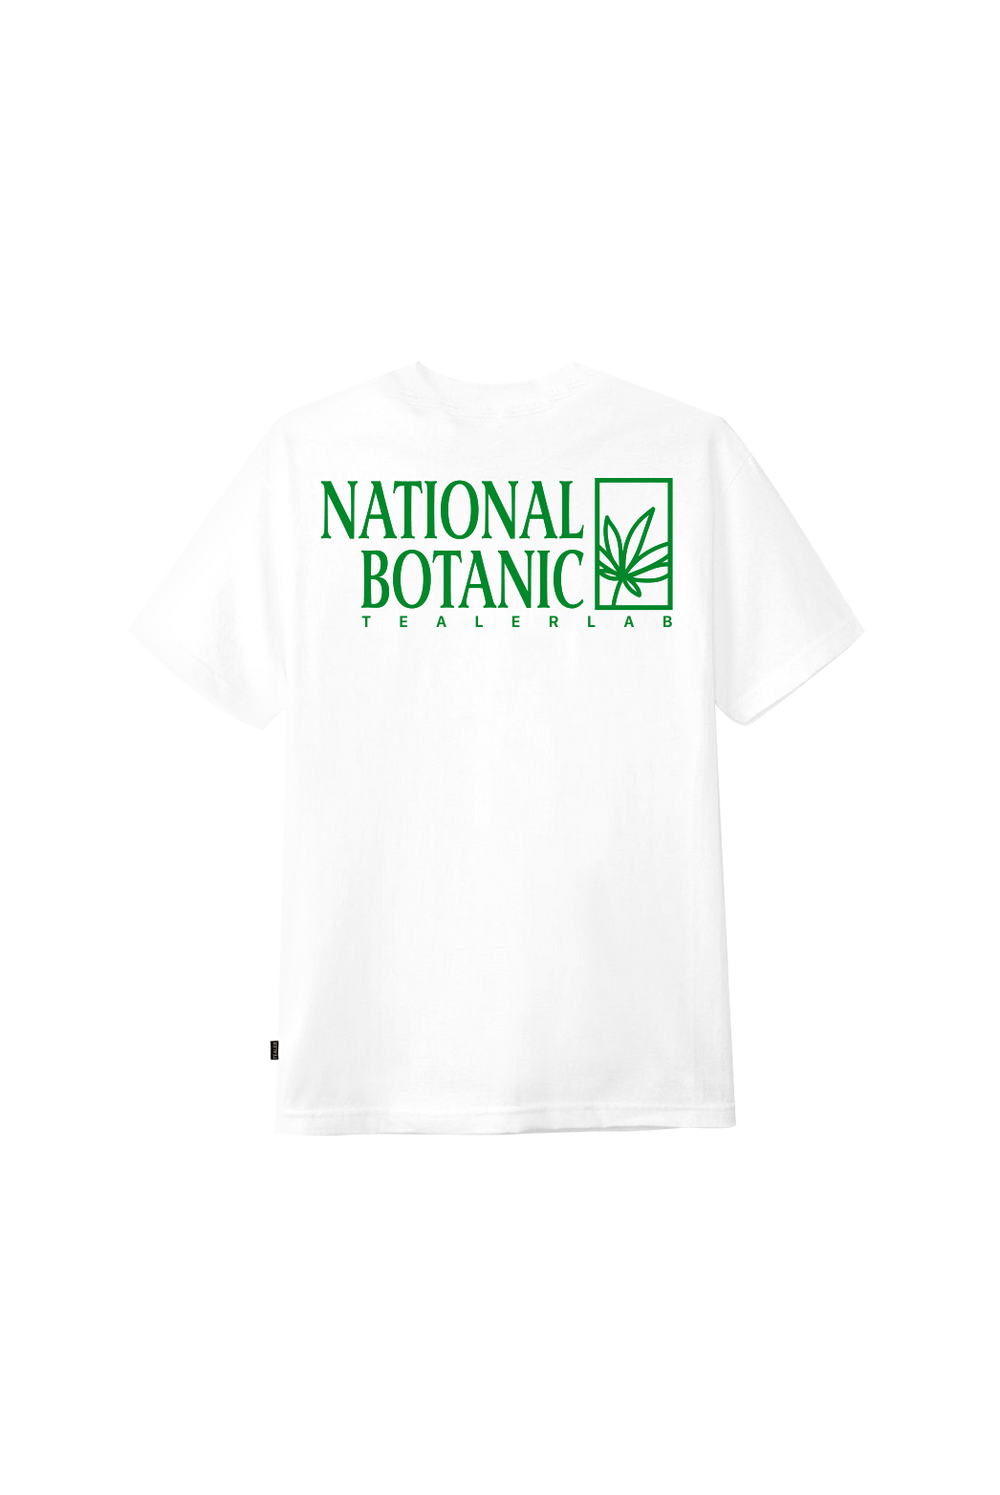 National Botanic Tealerlab, Tee White